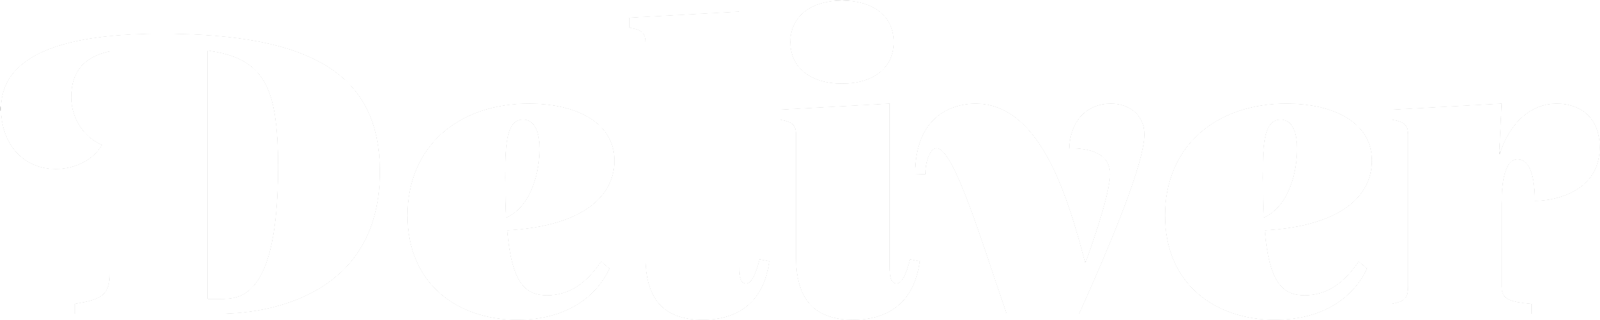 deliver-white-logo